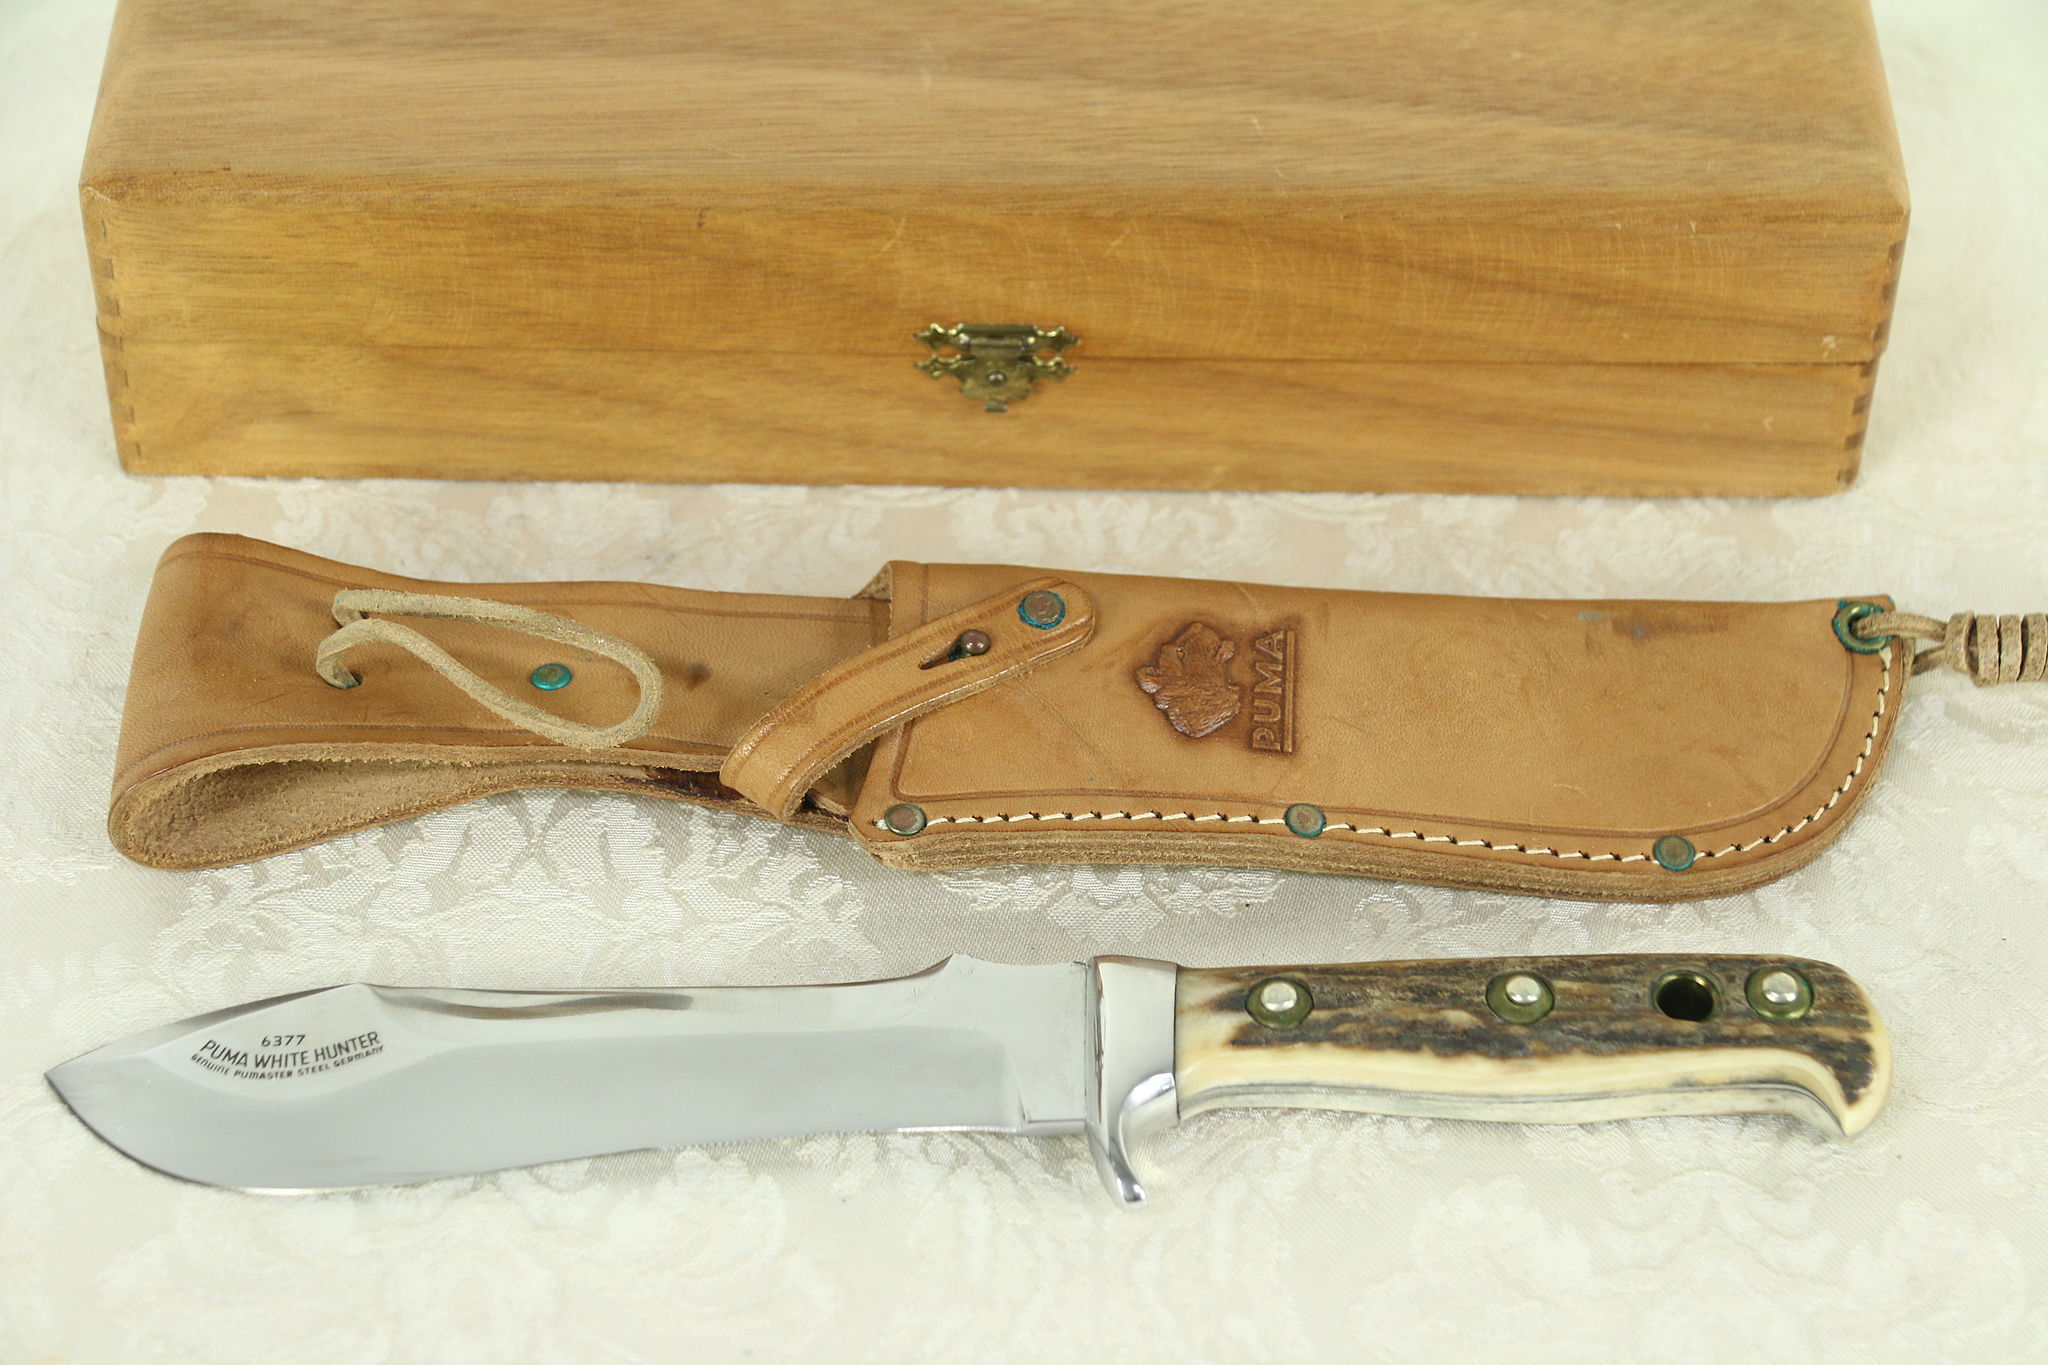 Puma Hunter 6377 Knife, Staghorn Handle, Leather Sheath, Original Box